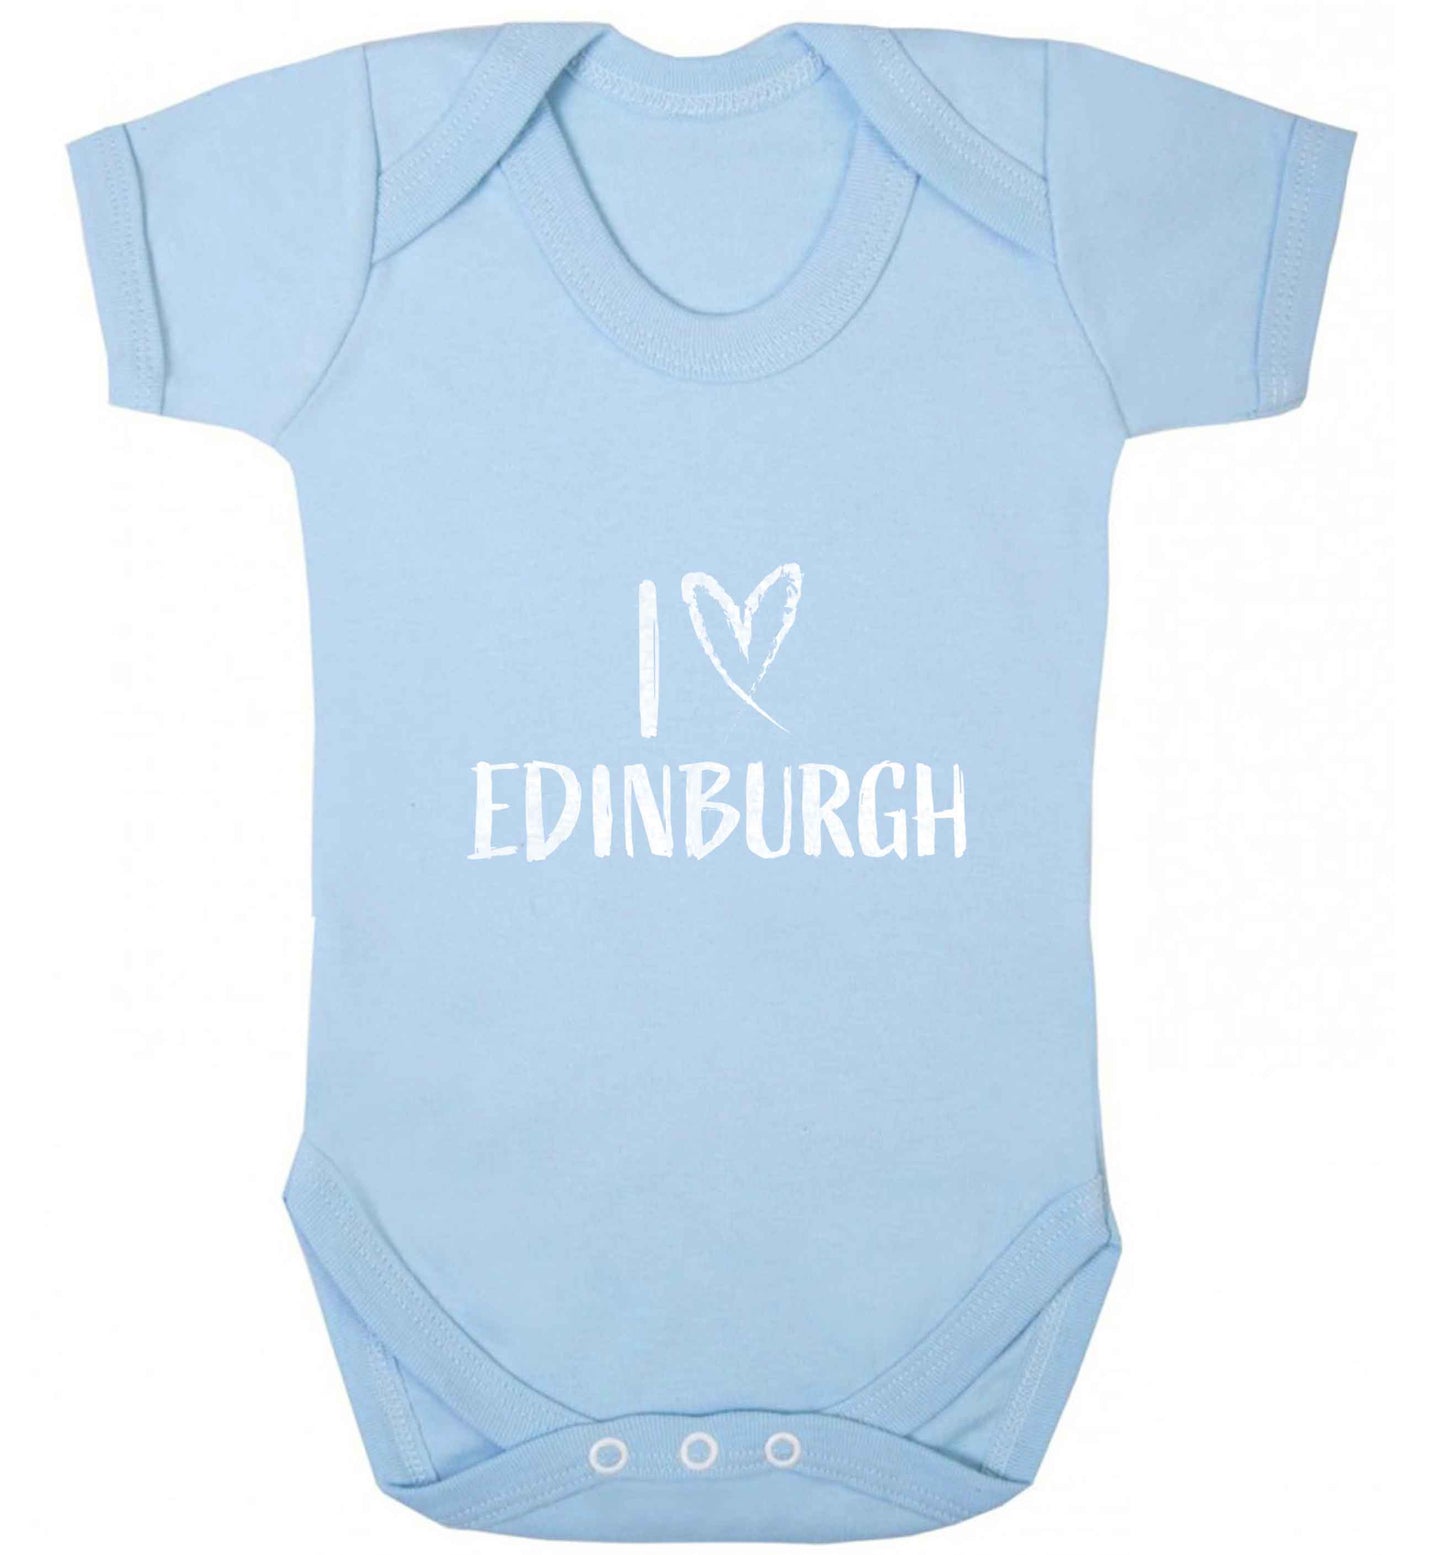 I love Edinburgh baby vest pale blue 18-24 months